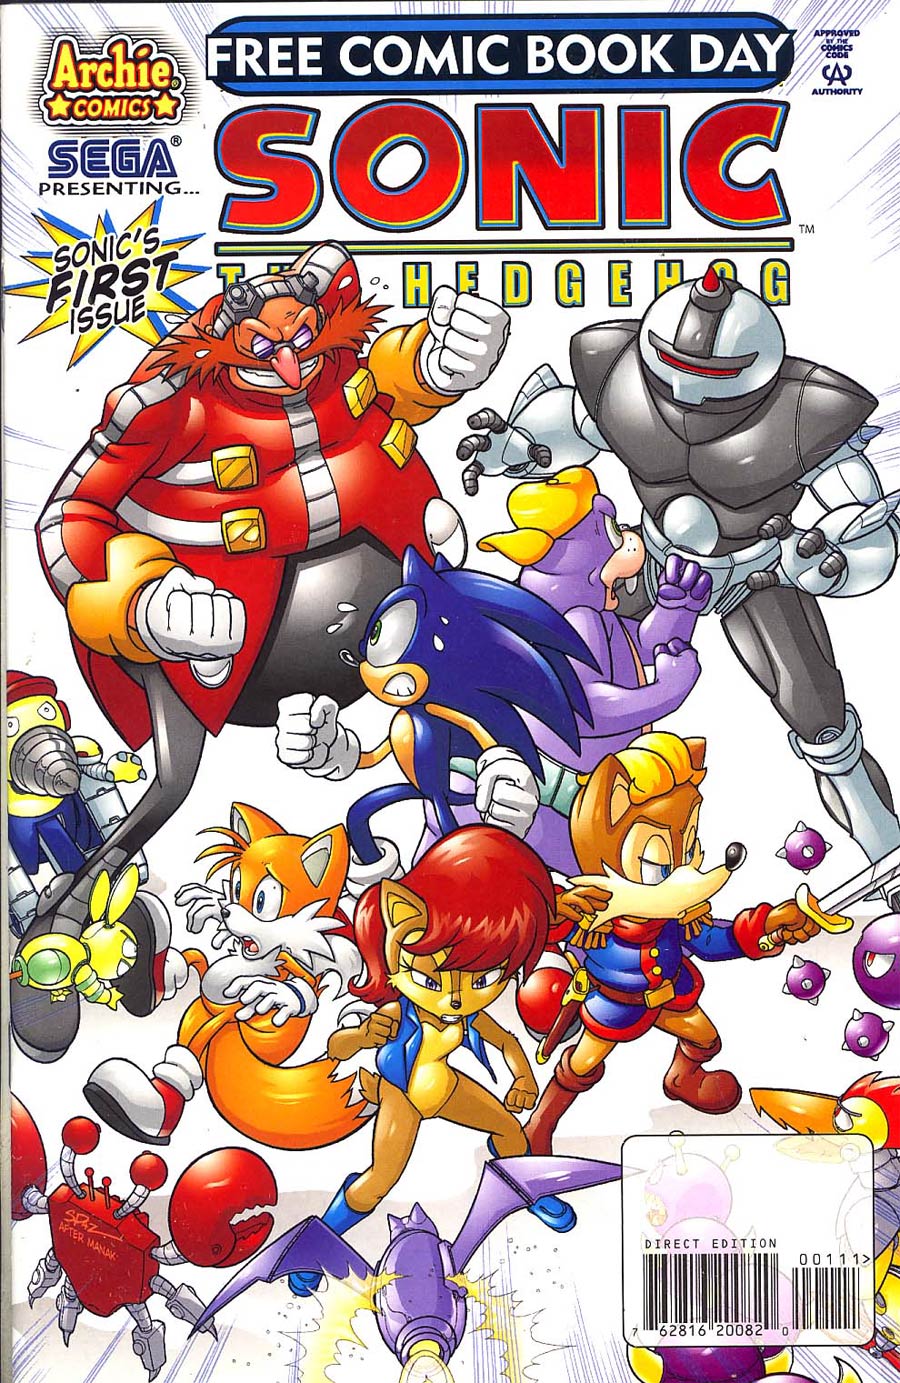 Sonic The Hedgehog FCBD 2008 #1